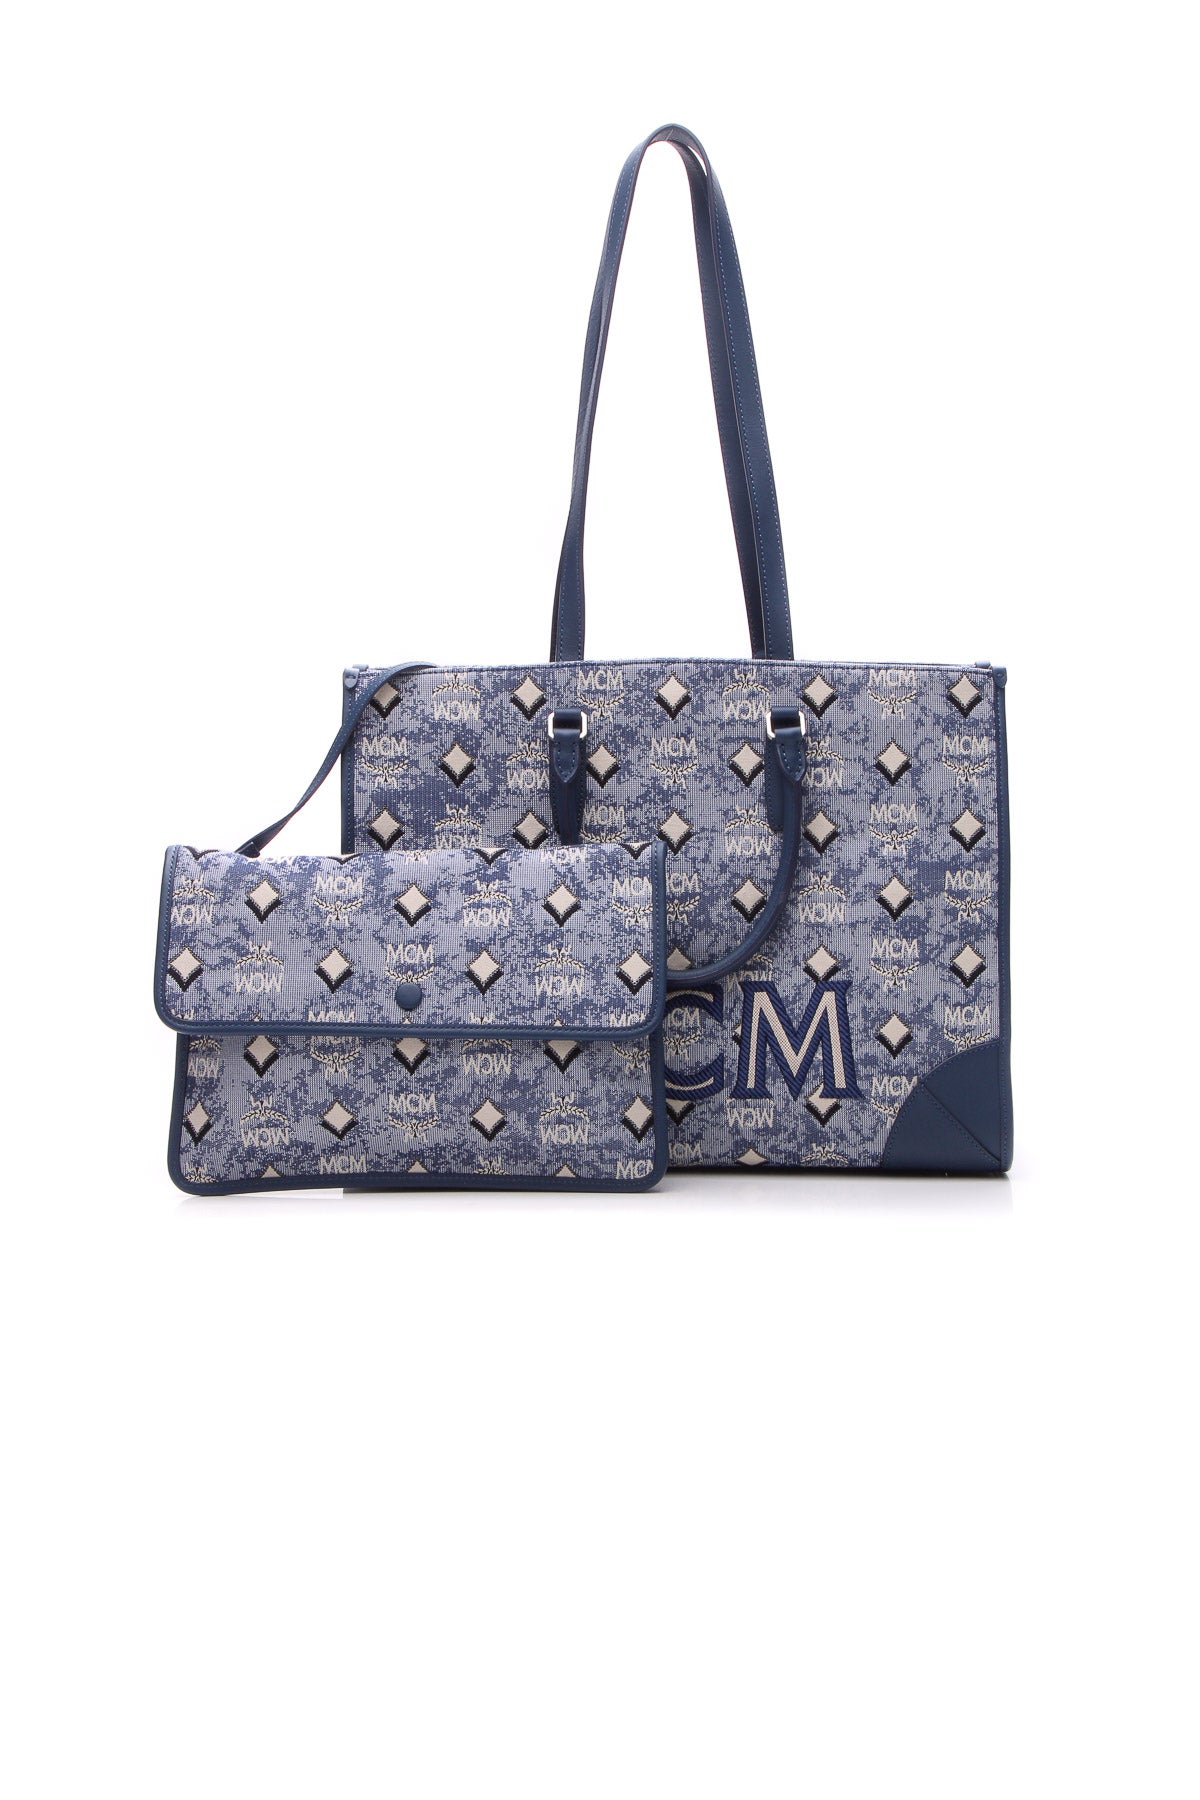 MCM Jacquard Logo Tote Bag - Couture USA